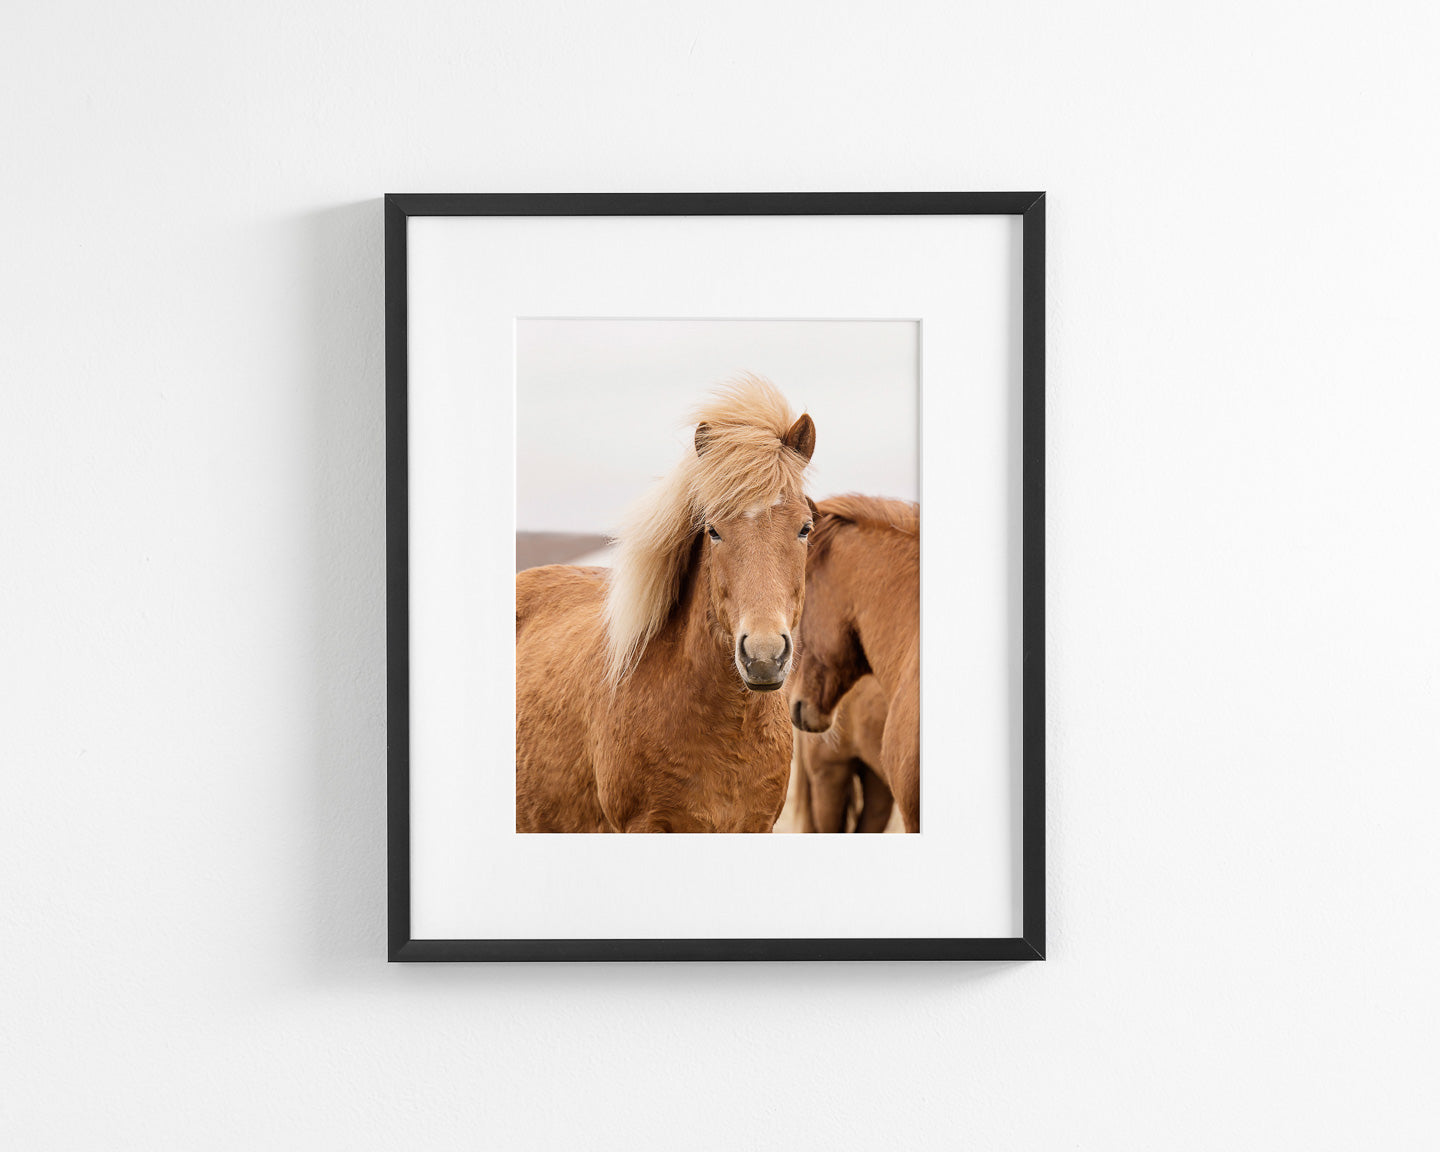 Collectible Icelandic Pony - 70514